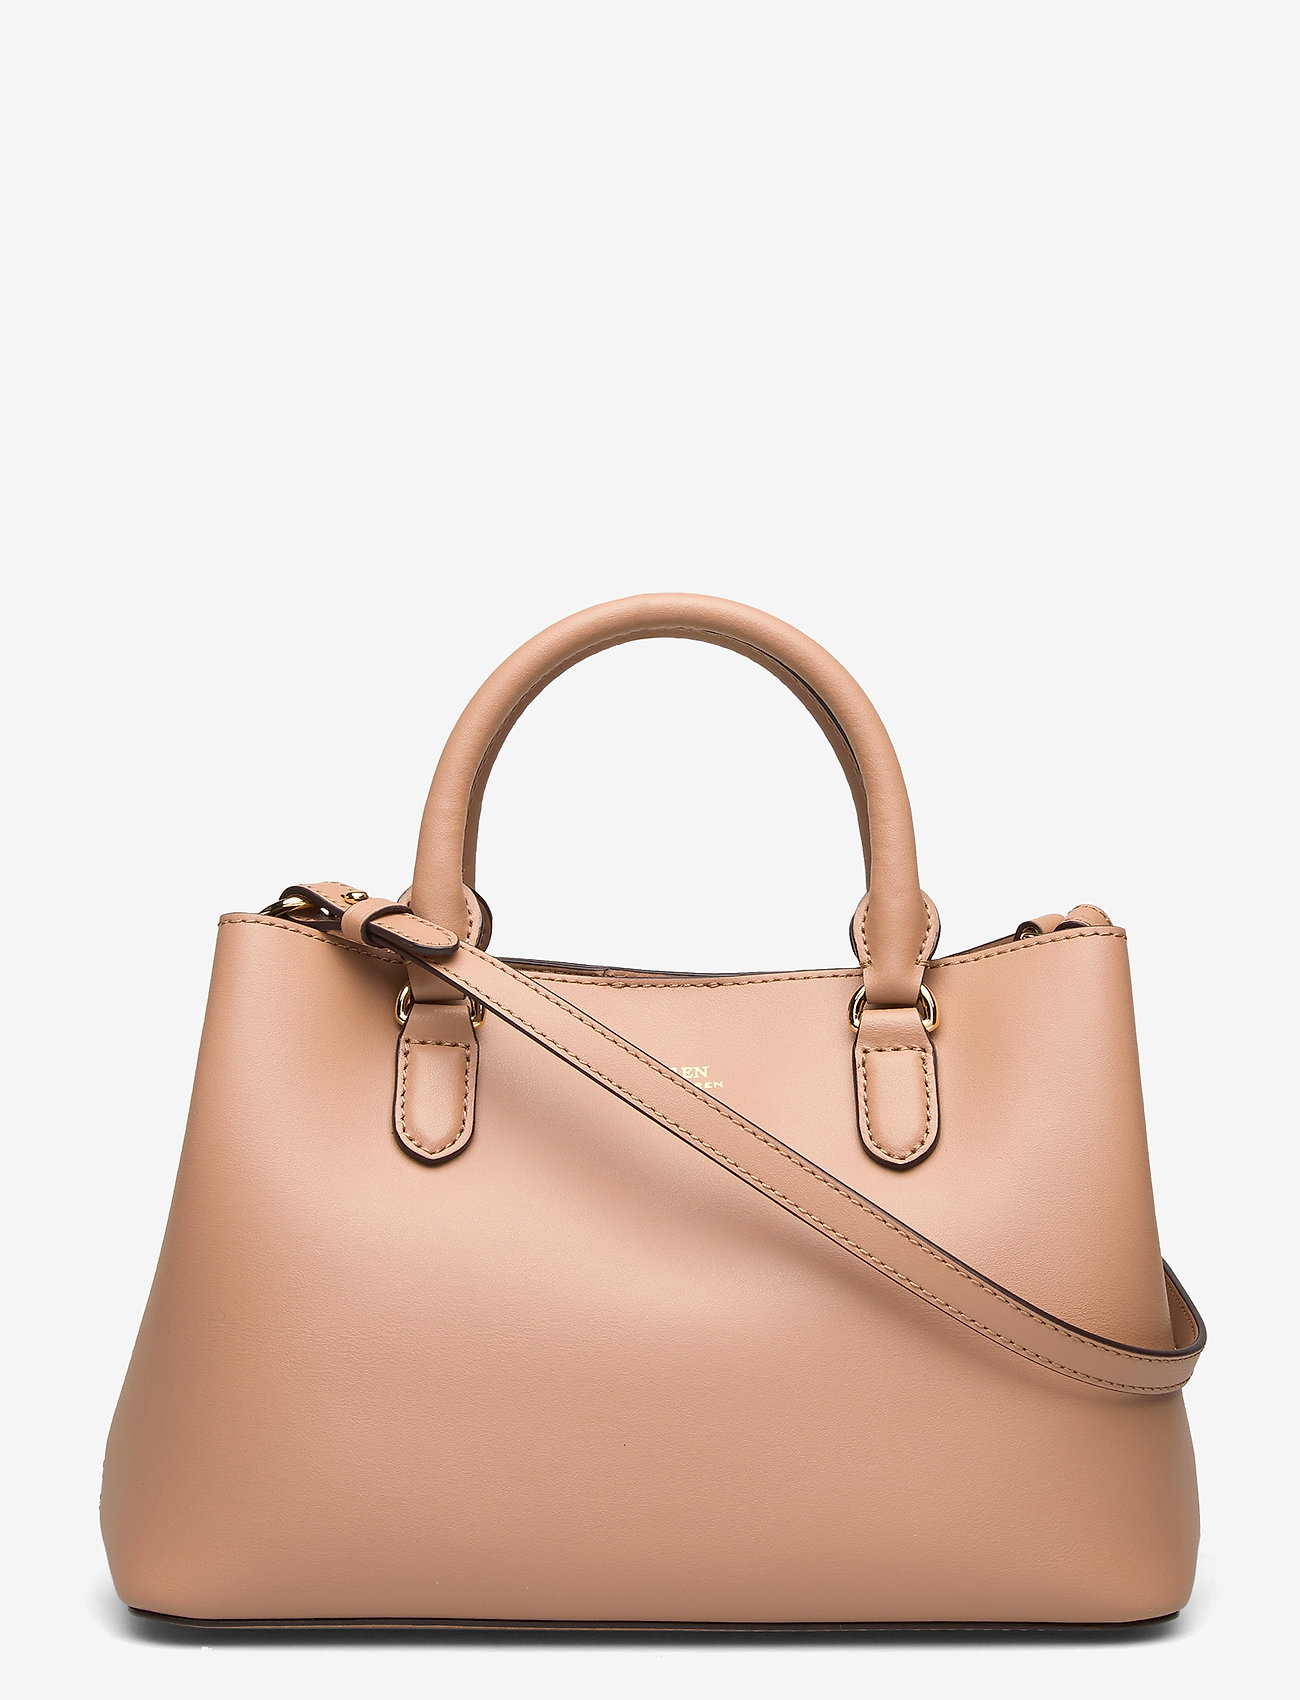 leather marcy satchel